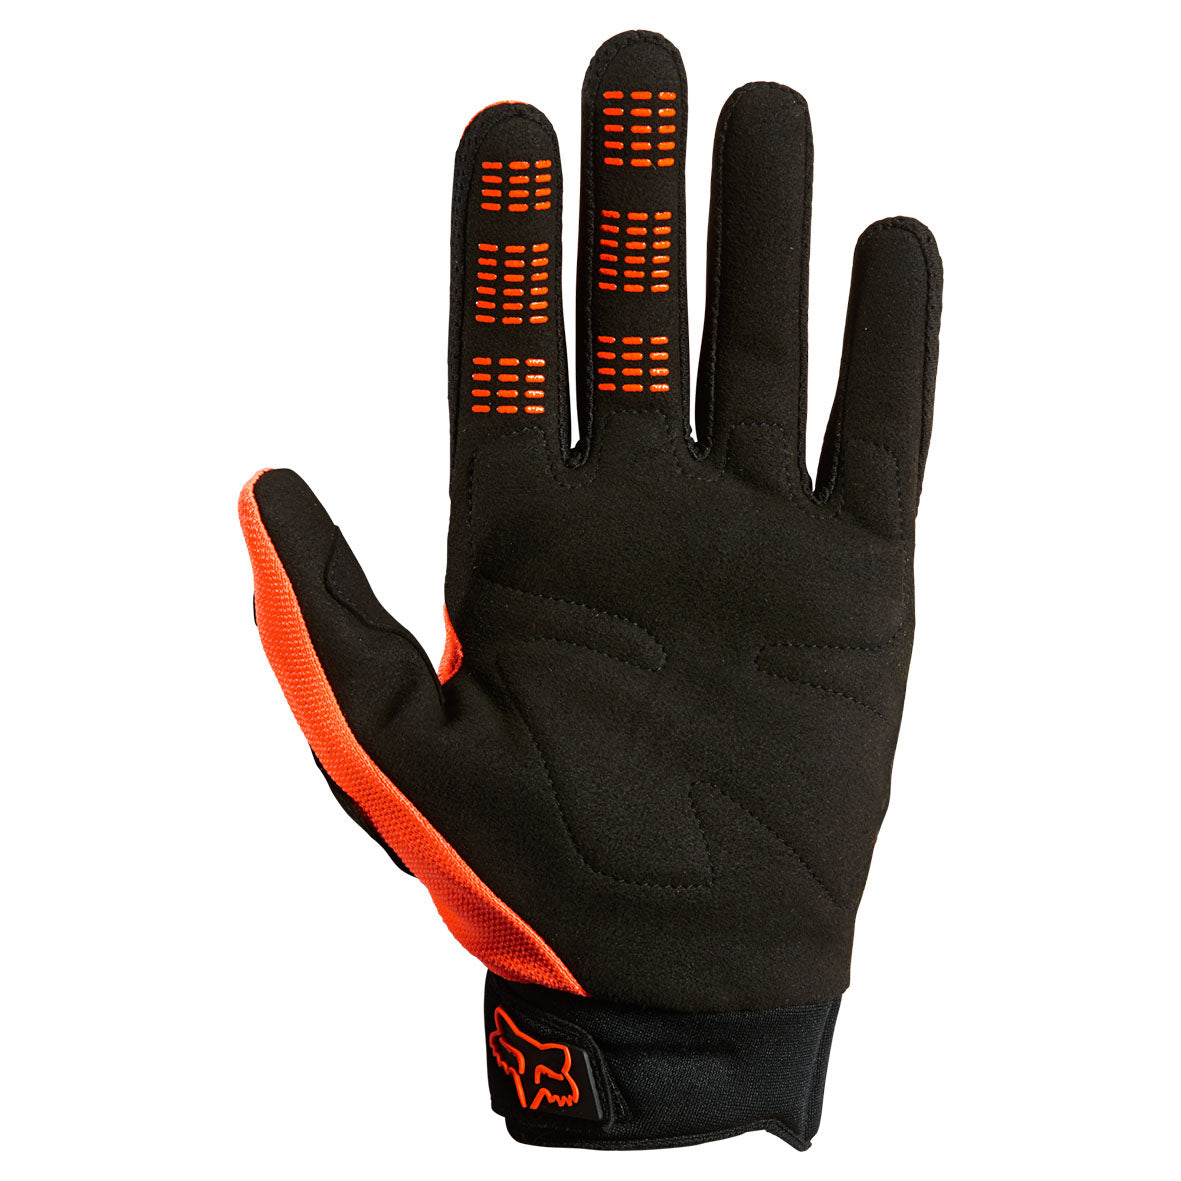 Fox Youth Dirtpaw Gloves (Fluo Orange)